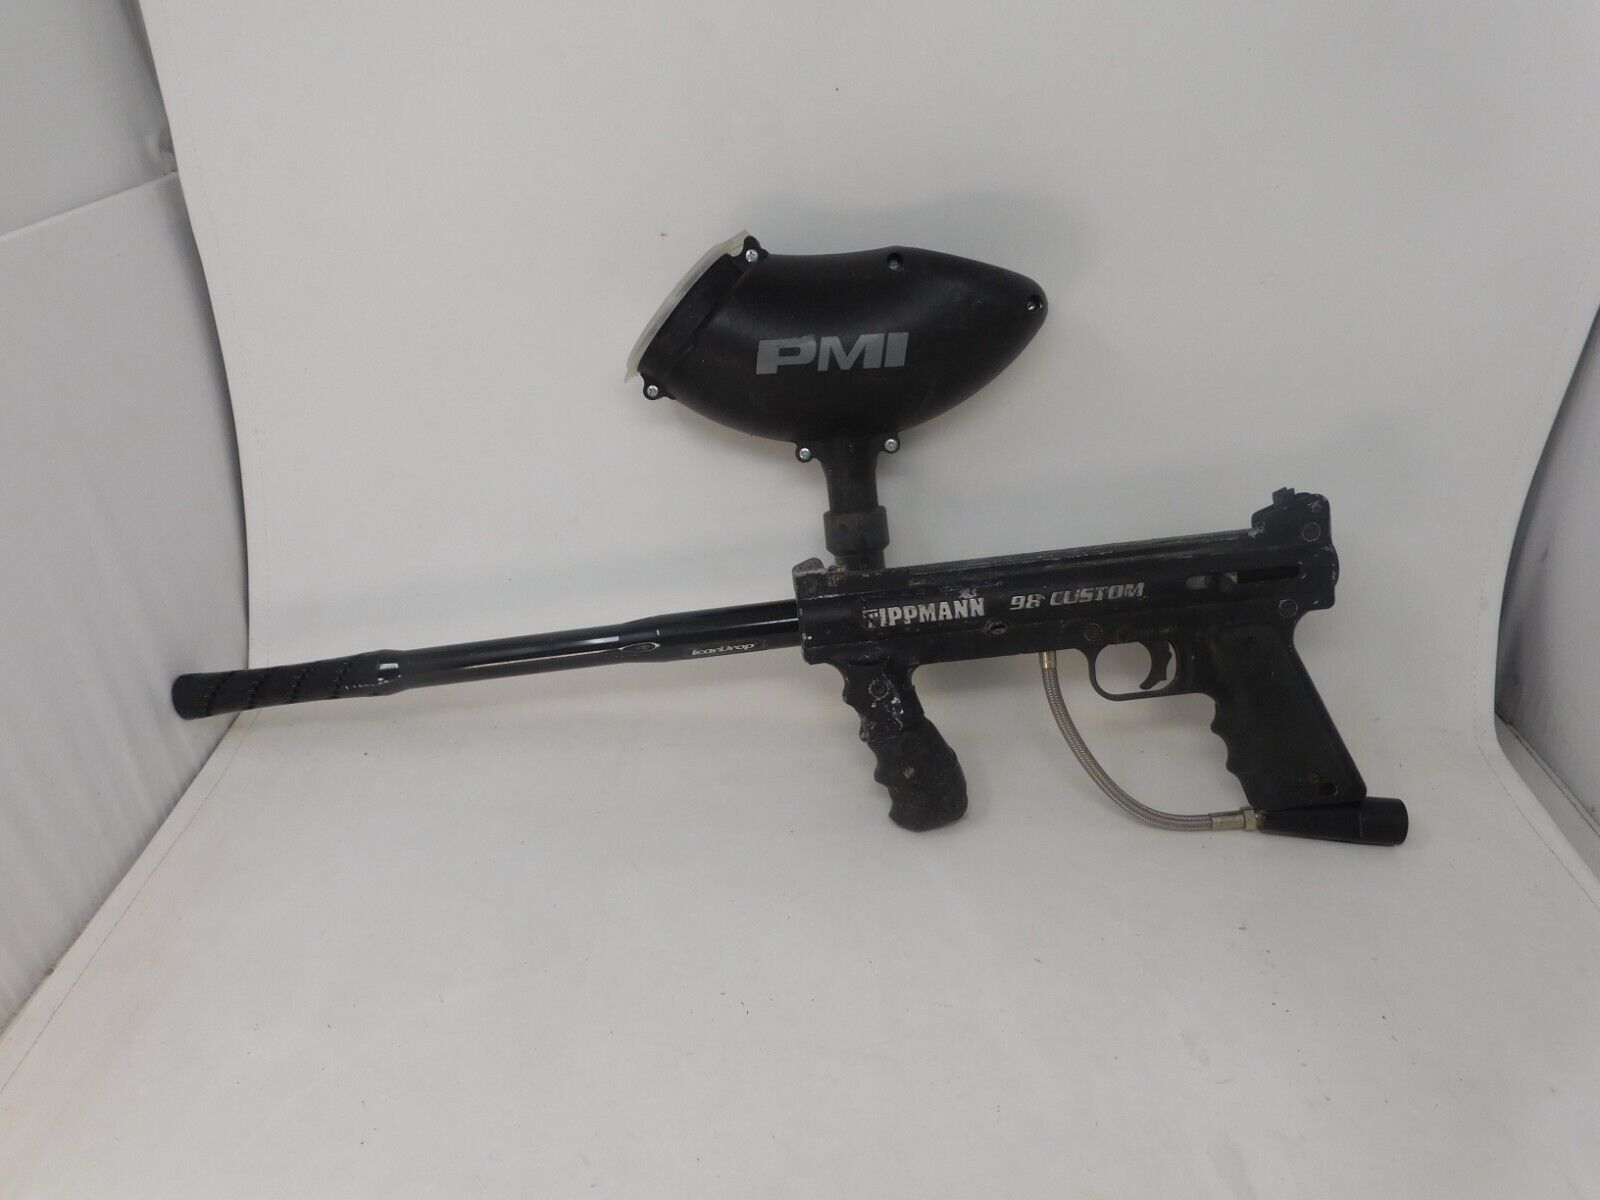 Tippmann 98 Custom Paintball Marker Gun